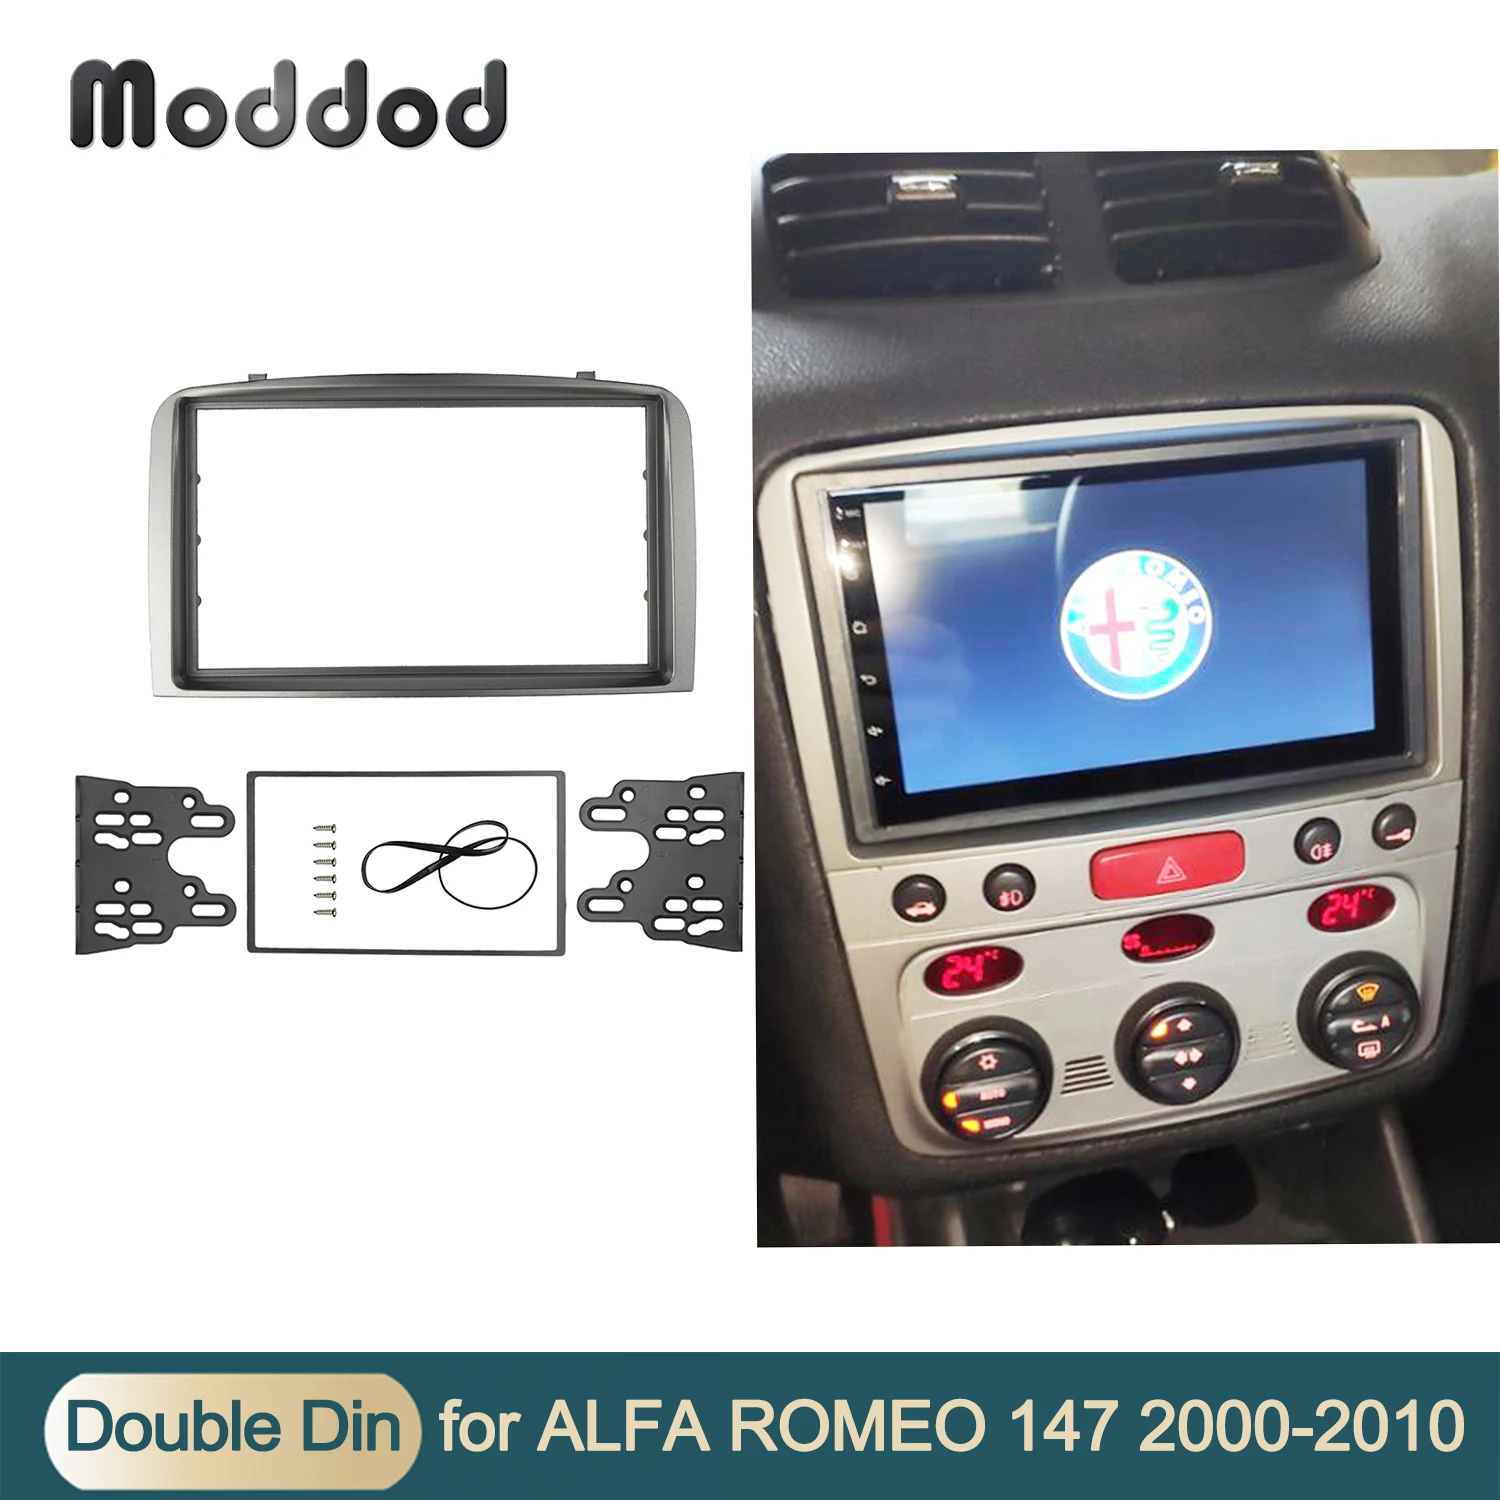 applaus Illustreren Streng 2 Din Radio Fascias Voor Alfa Romeo 147 Dvd Stereo Cd Dvd Panel Dash  Montage Inbouwen Installatie Trim Kit Gezicht frame Bezel